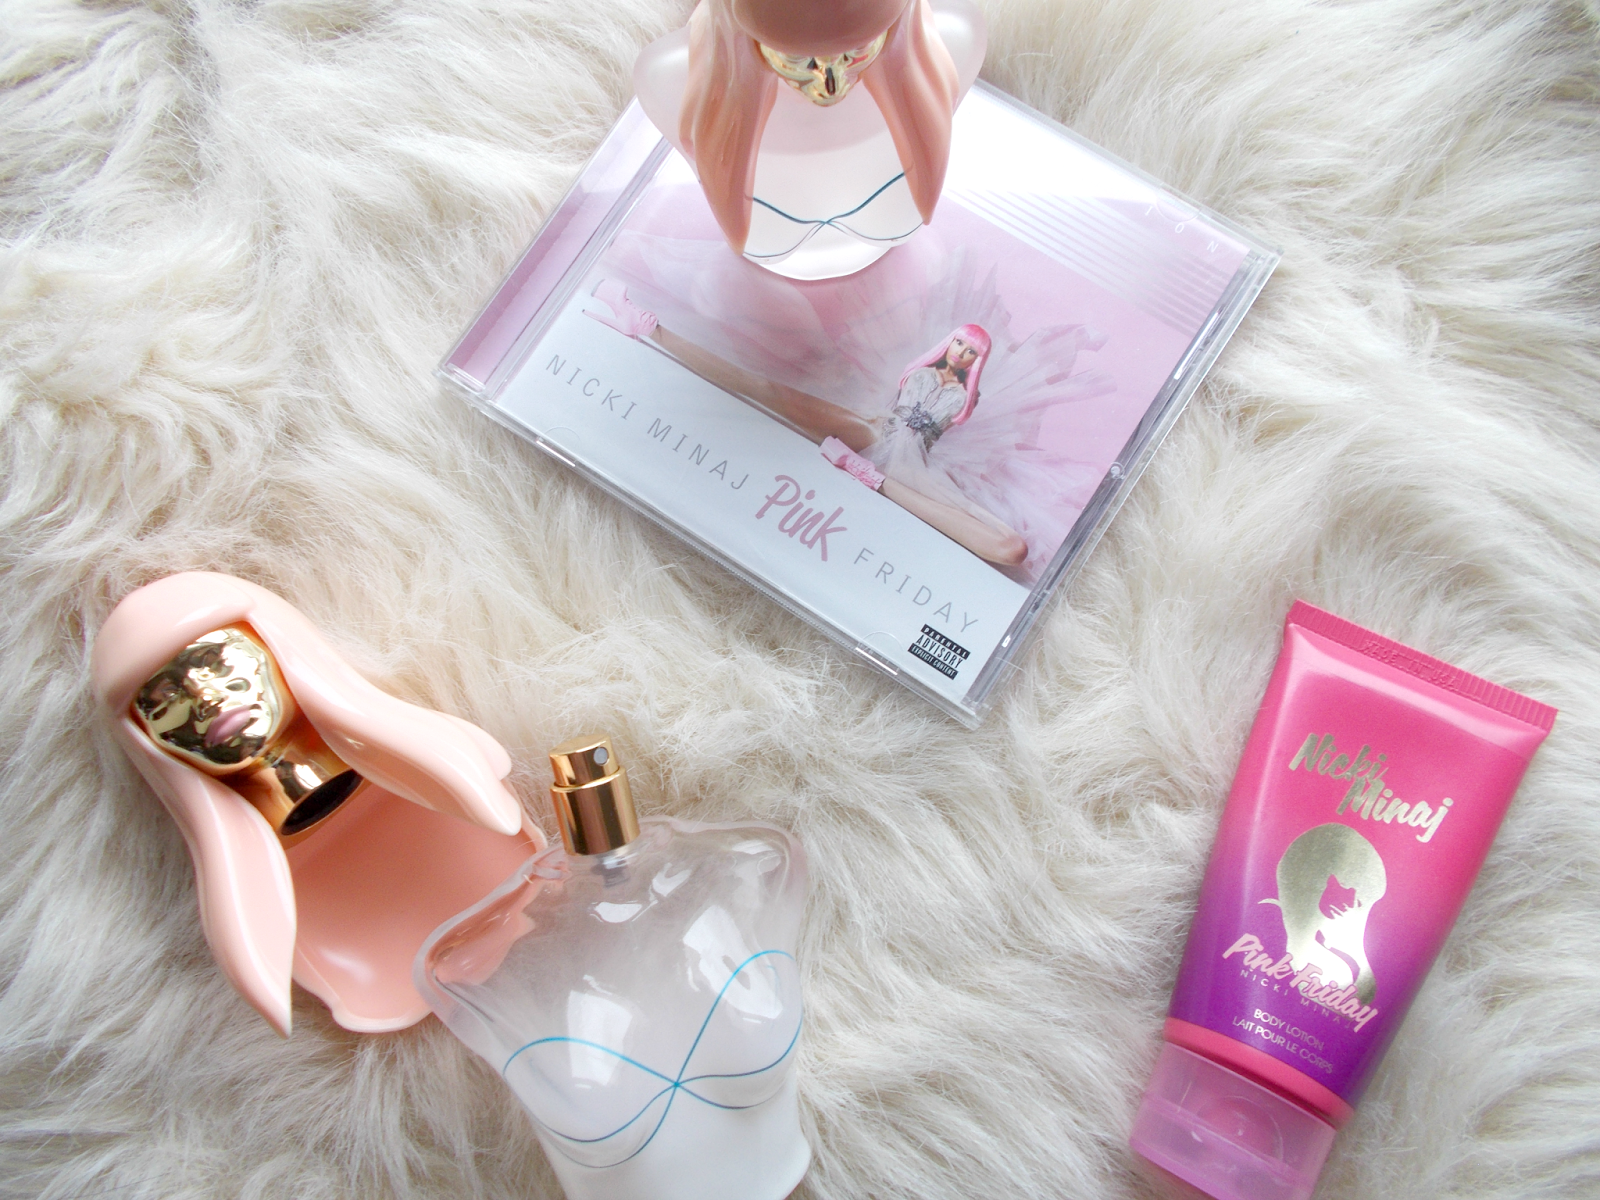 nicki minaj pink friday perfume review